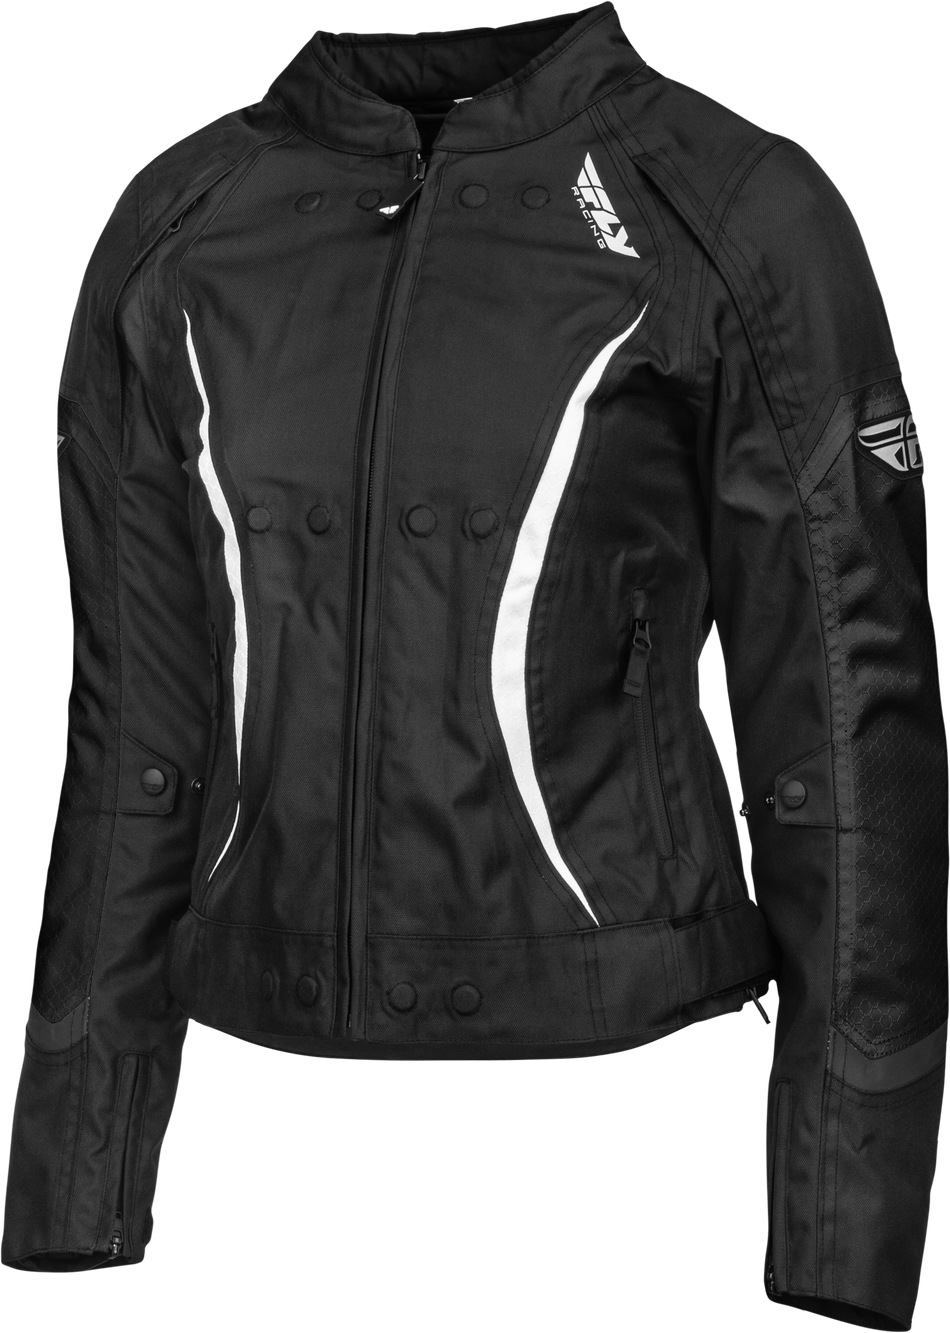 FLY RACING Women's Butane Jacket Black/White Xl 477-7042X